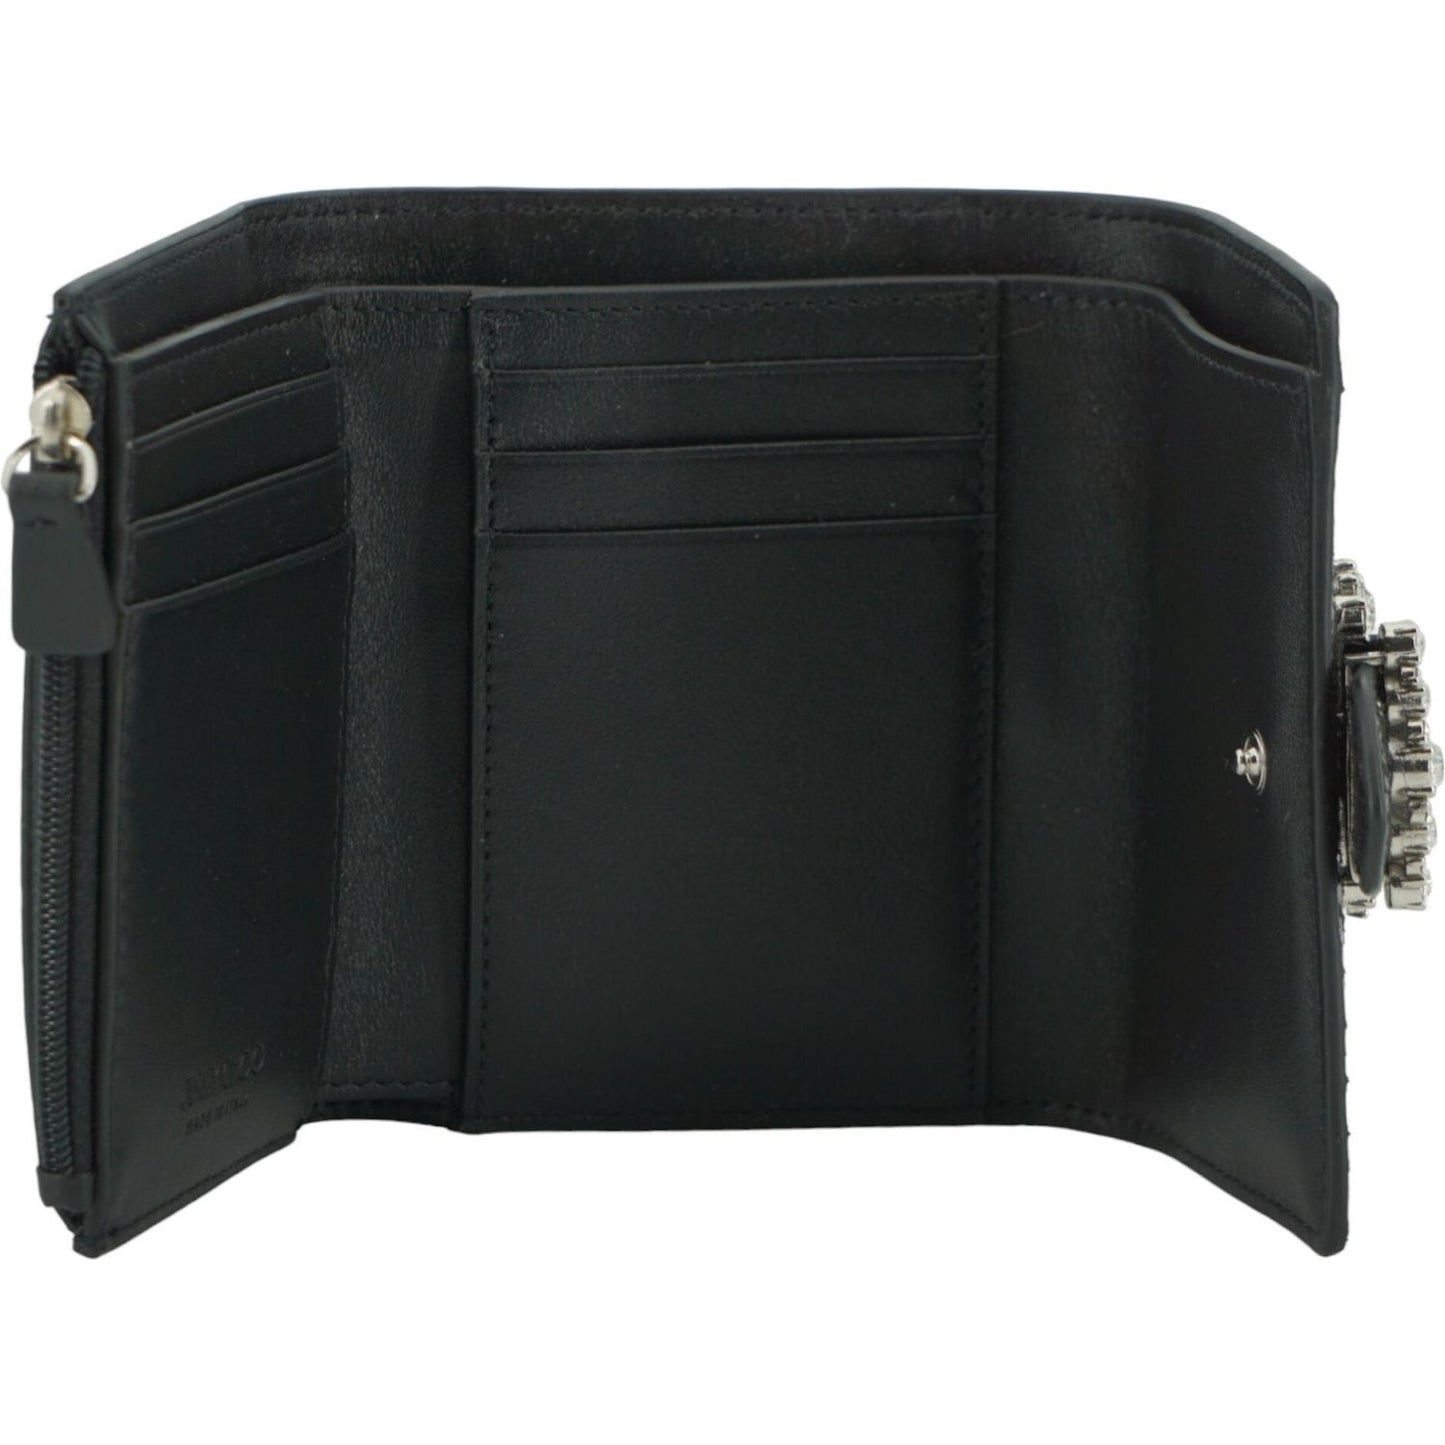 Jimmy Choo Black Leather Cheri Wallet black-leather-cheri-wallet